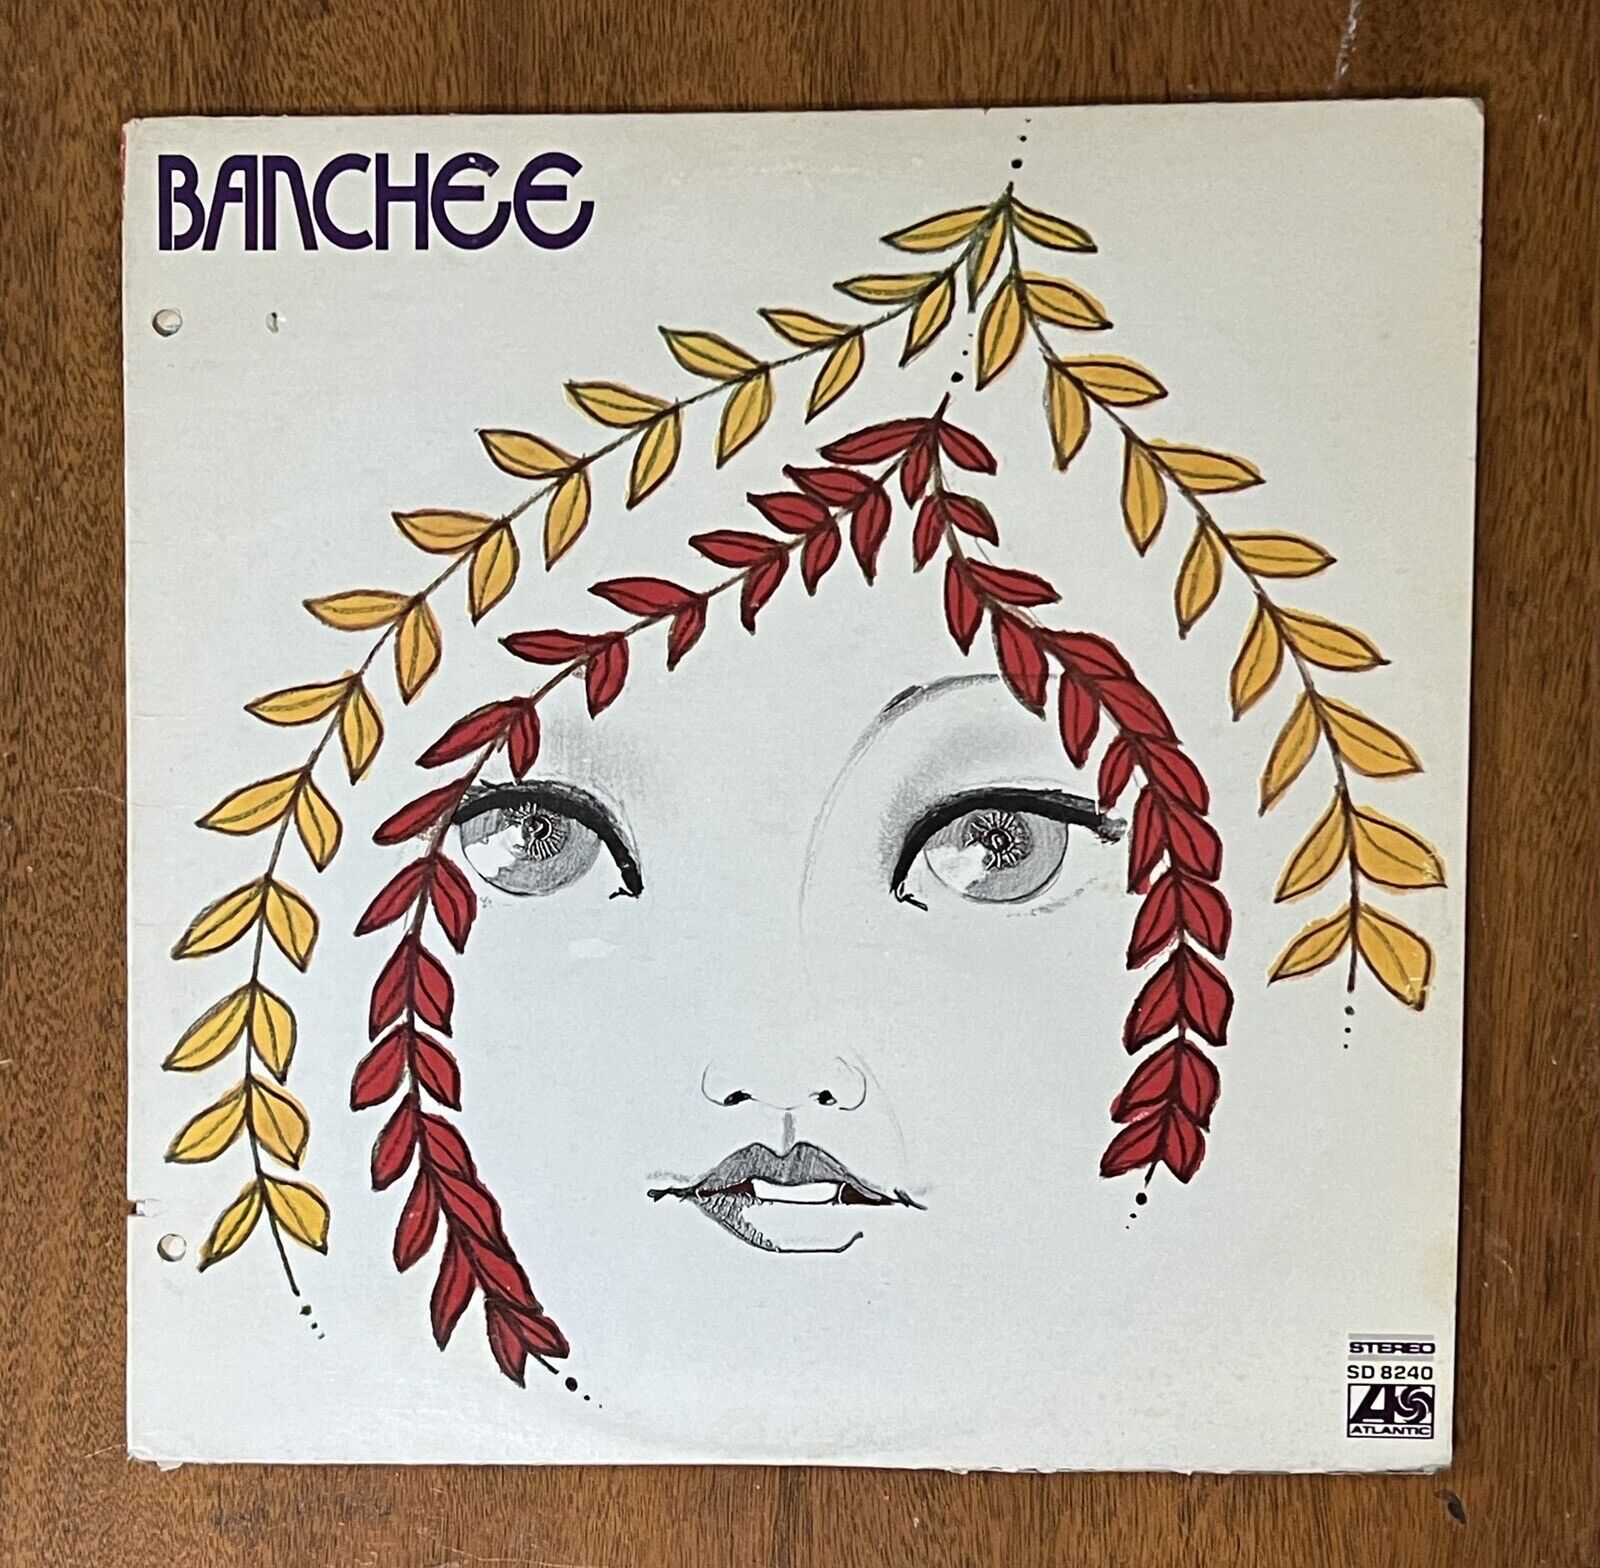 Banchee Self Titled Vinyl LP Atlantic SD 8240 Insert Rare Psychedelic Hard Rock